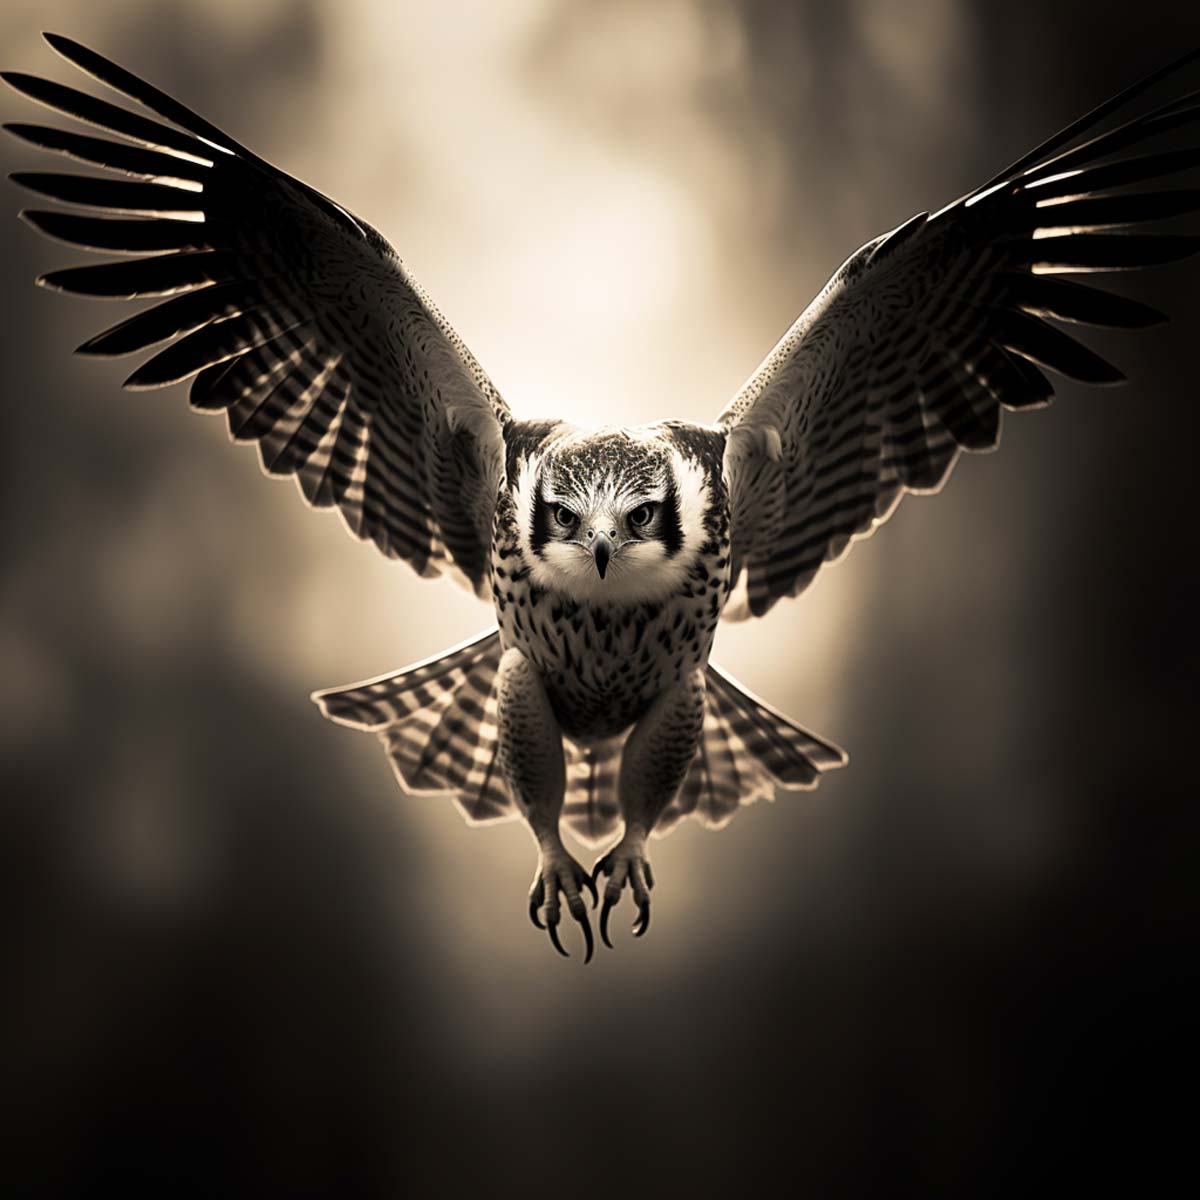 A Soaring Falcon symbolising Freyja's shapeshifting abilities